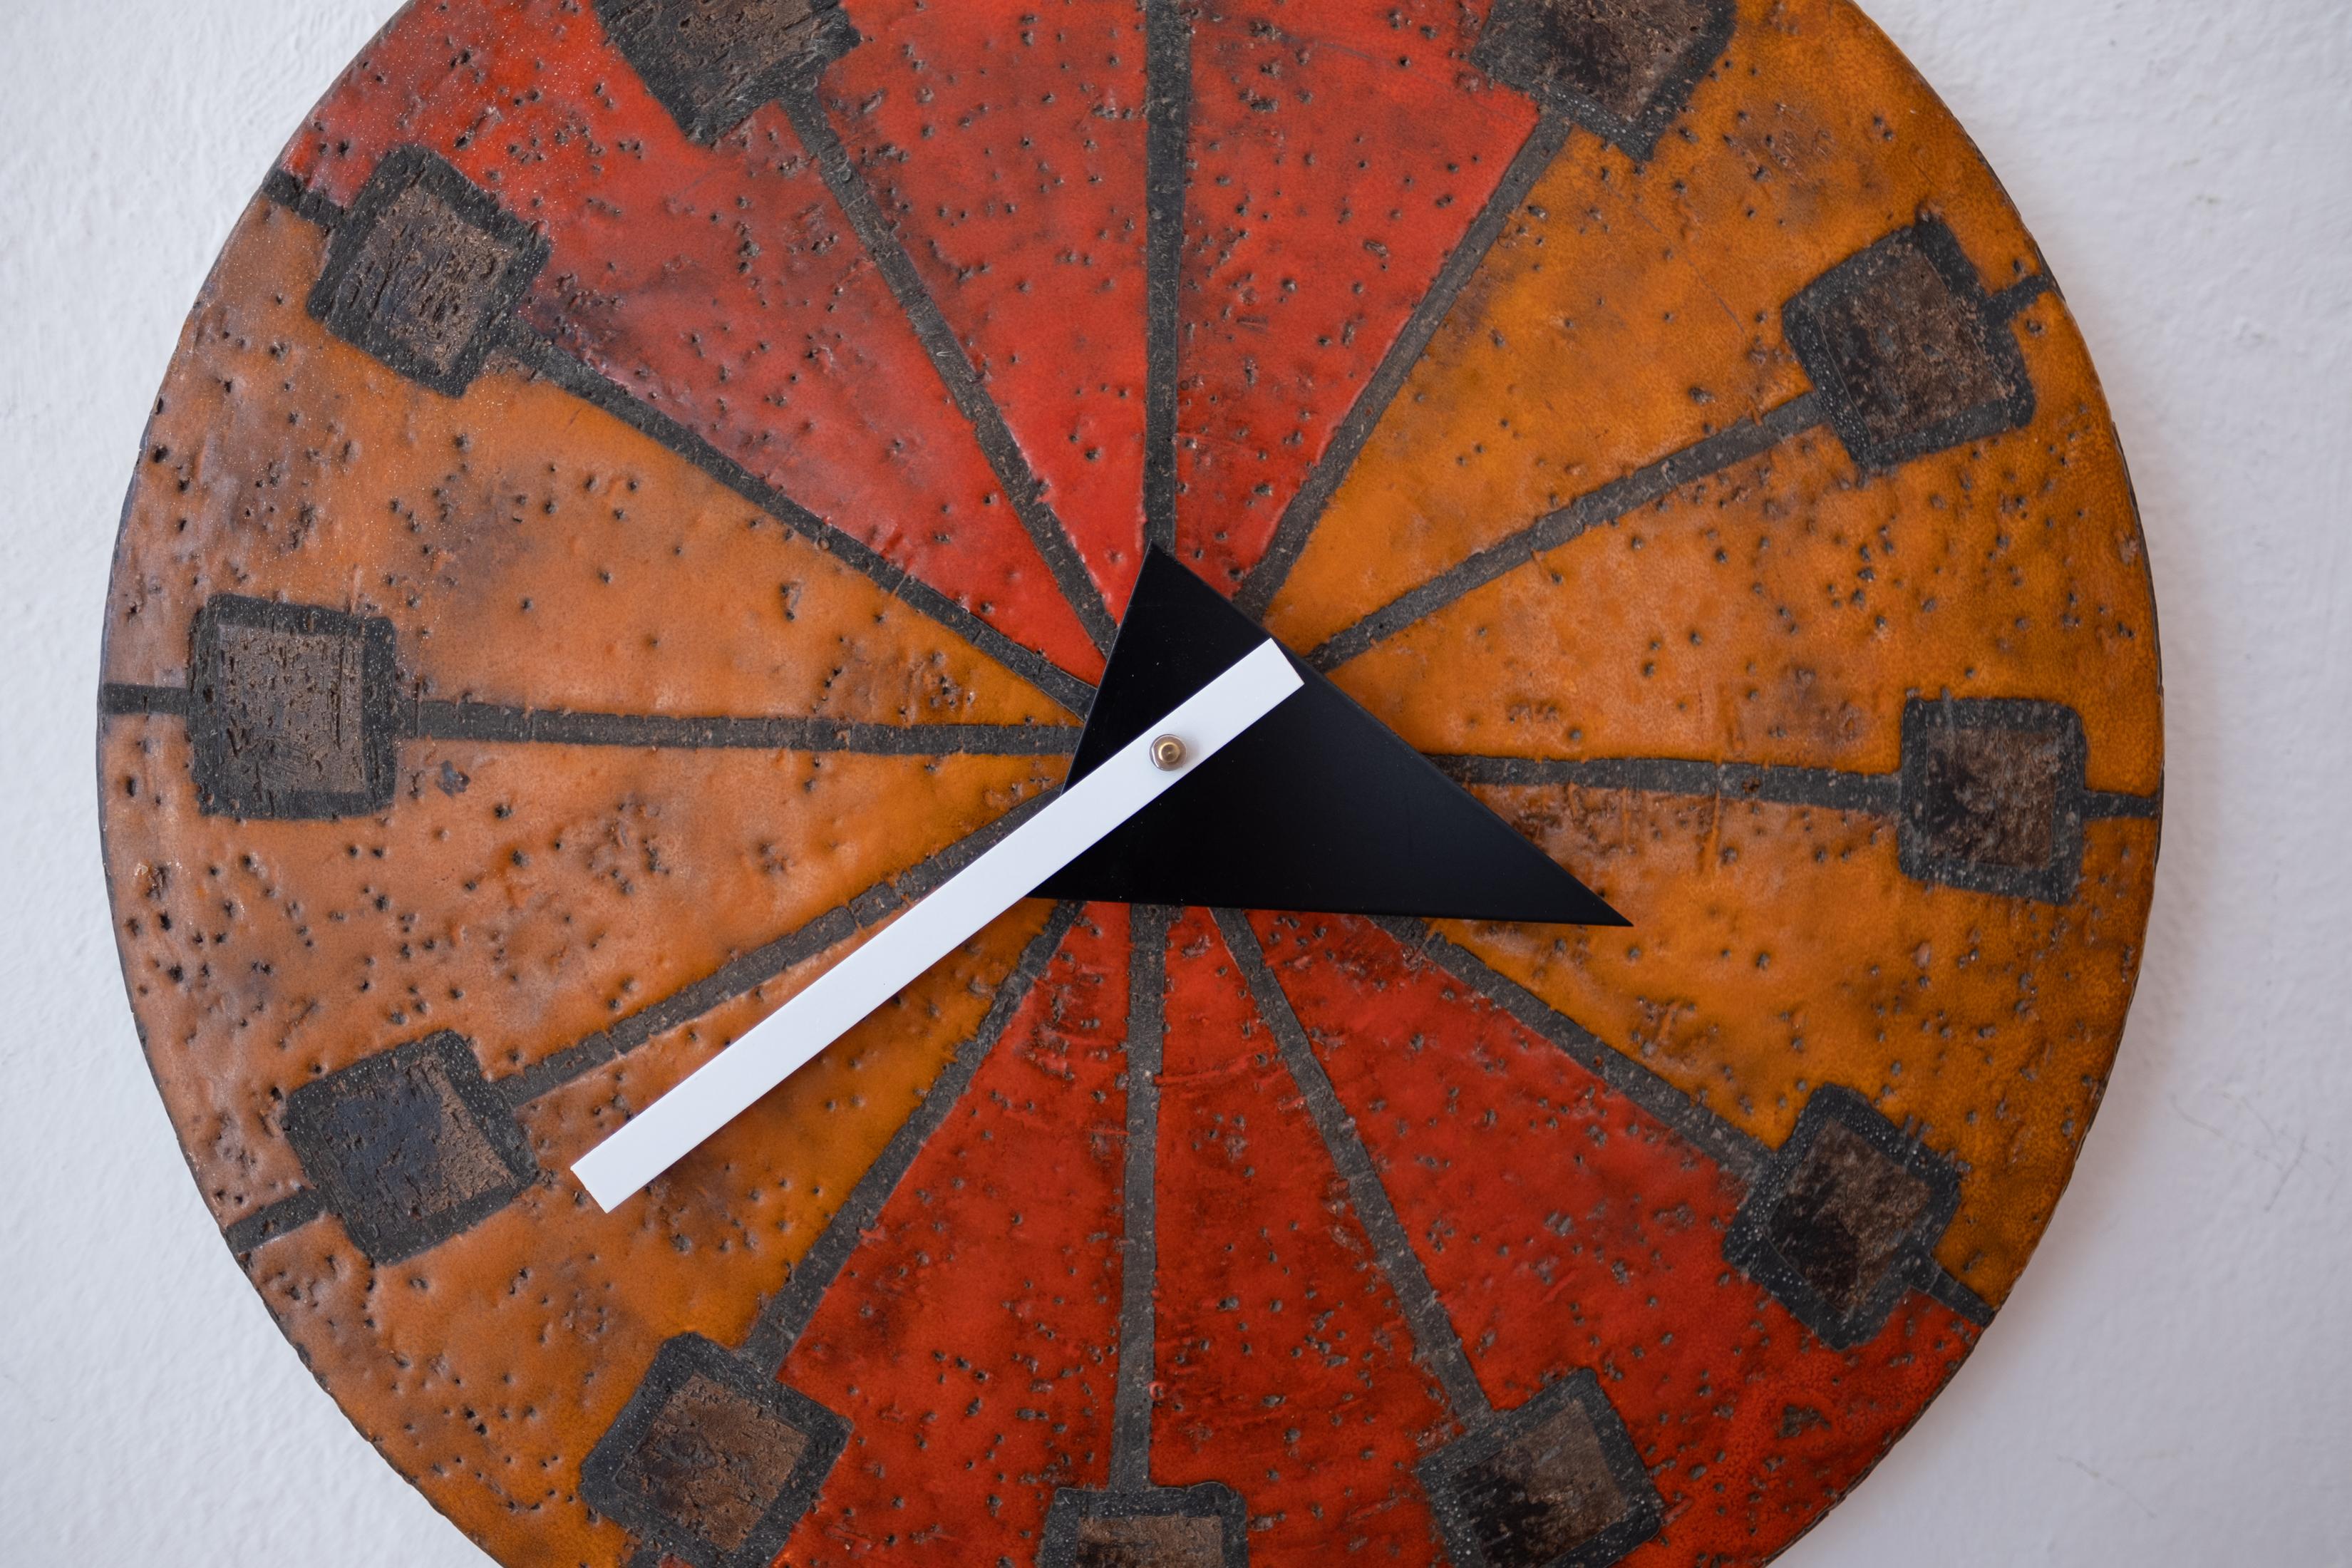 Italian Meridian Bitossi George Nelson Howard Miller Clock